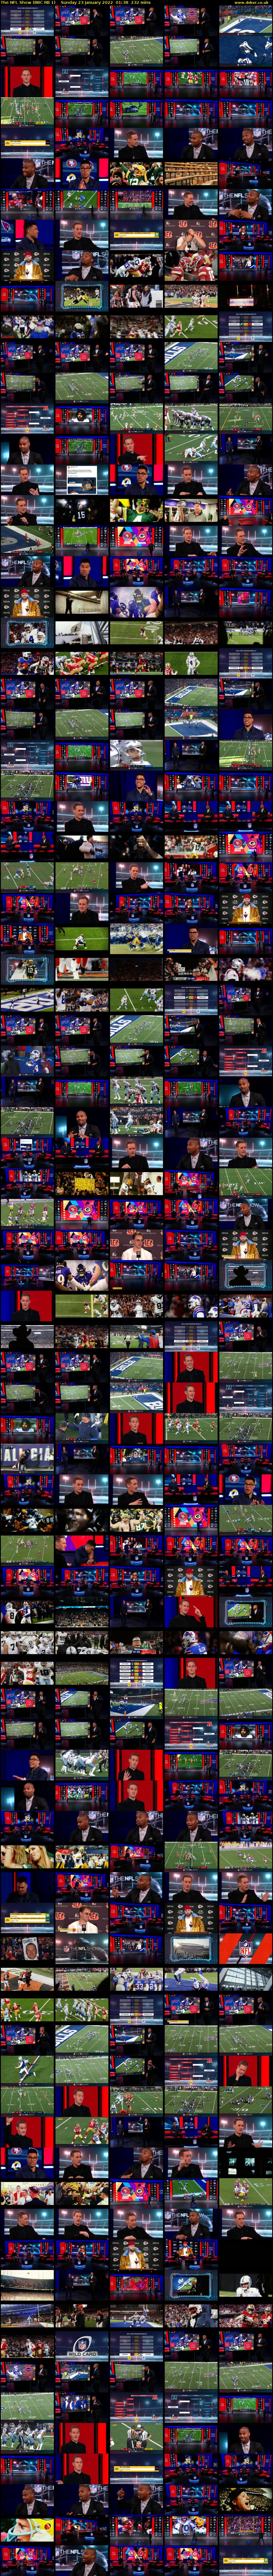 The NFL Show (BBC RB 1) Sunday 23 January 2022 01:38 - 05:30